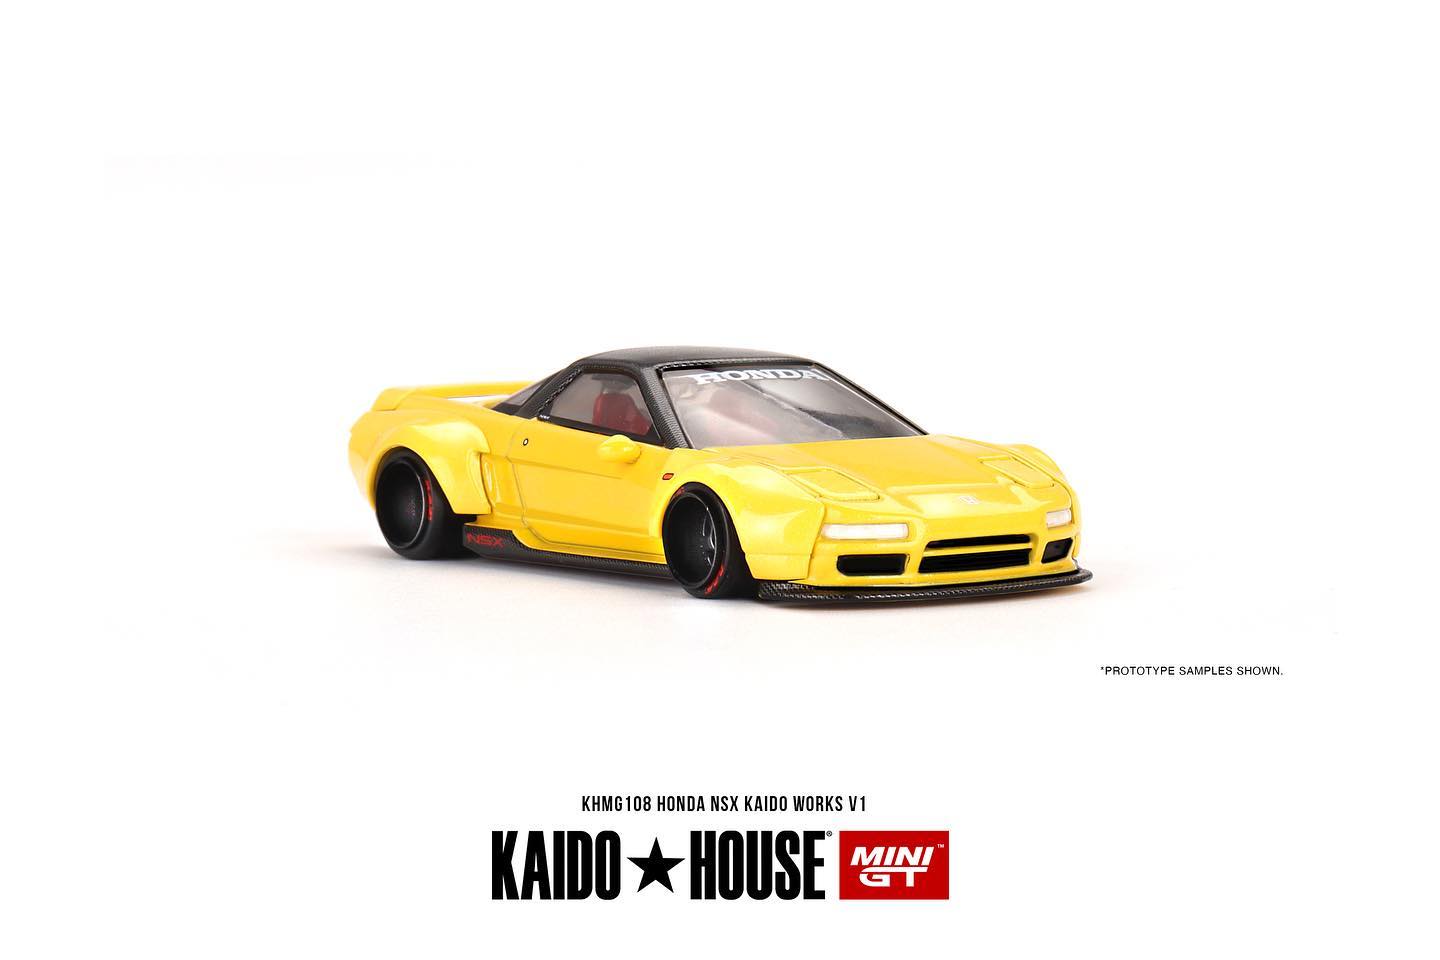 Mini GT x Kaido House Honda NSX in Yellow